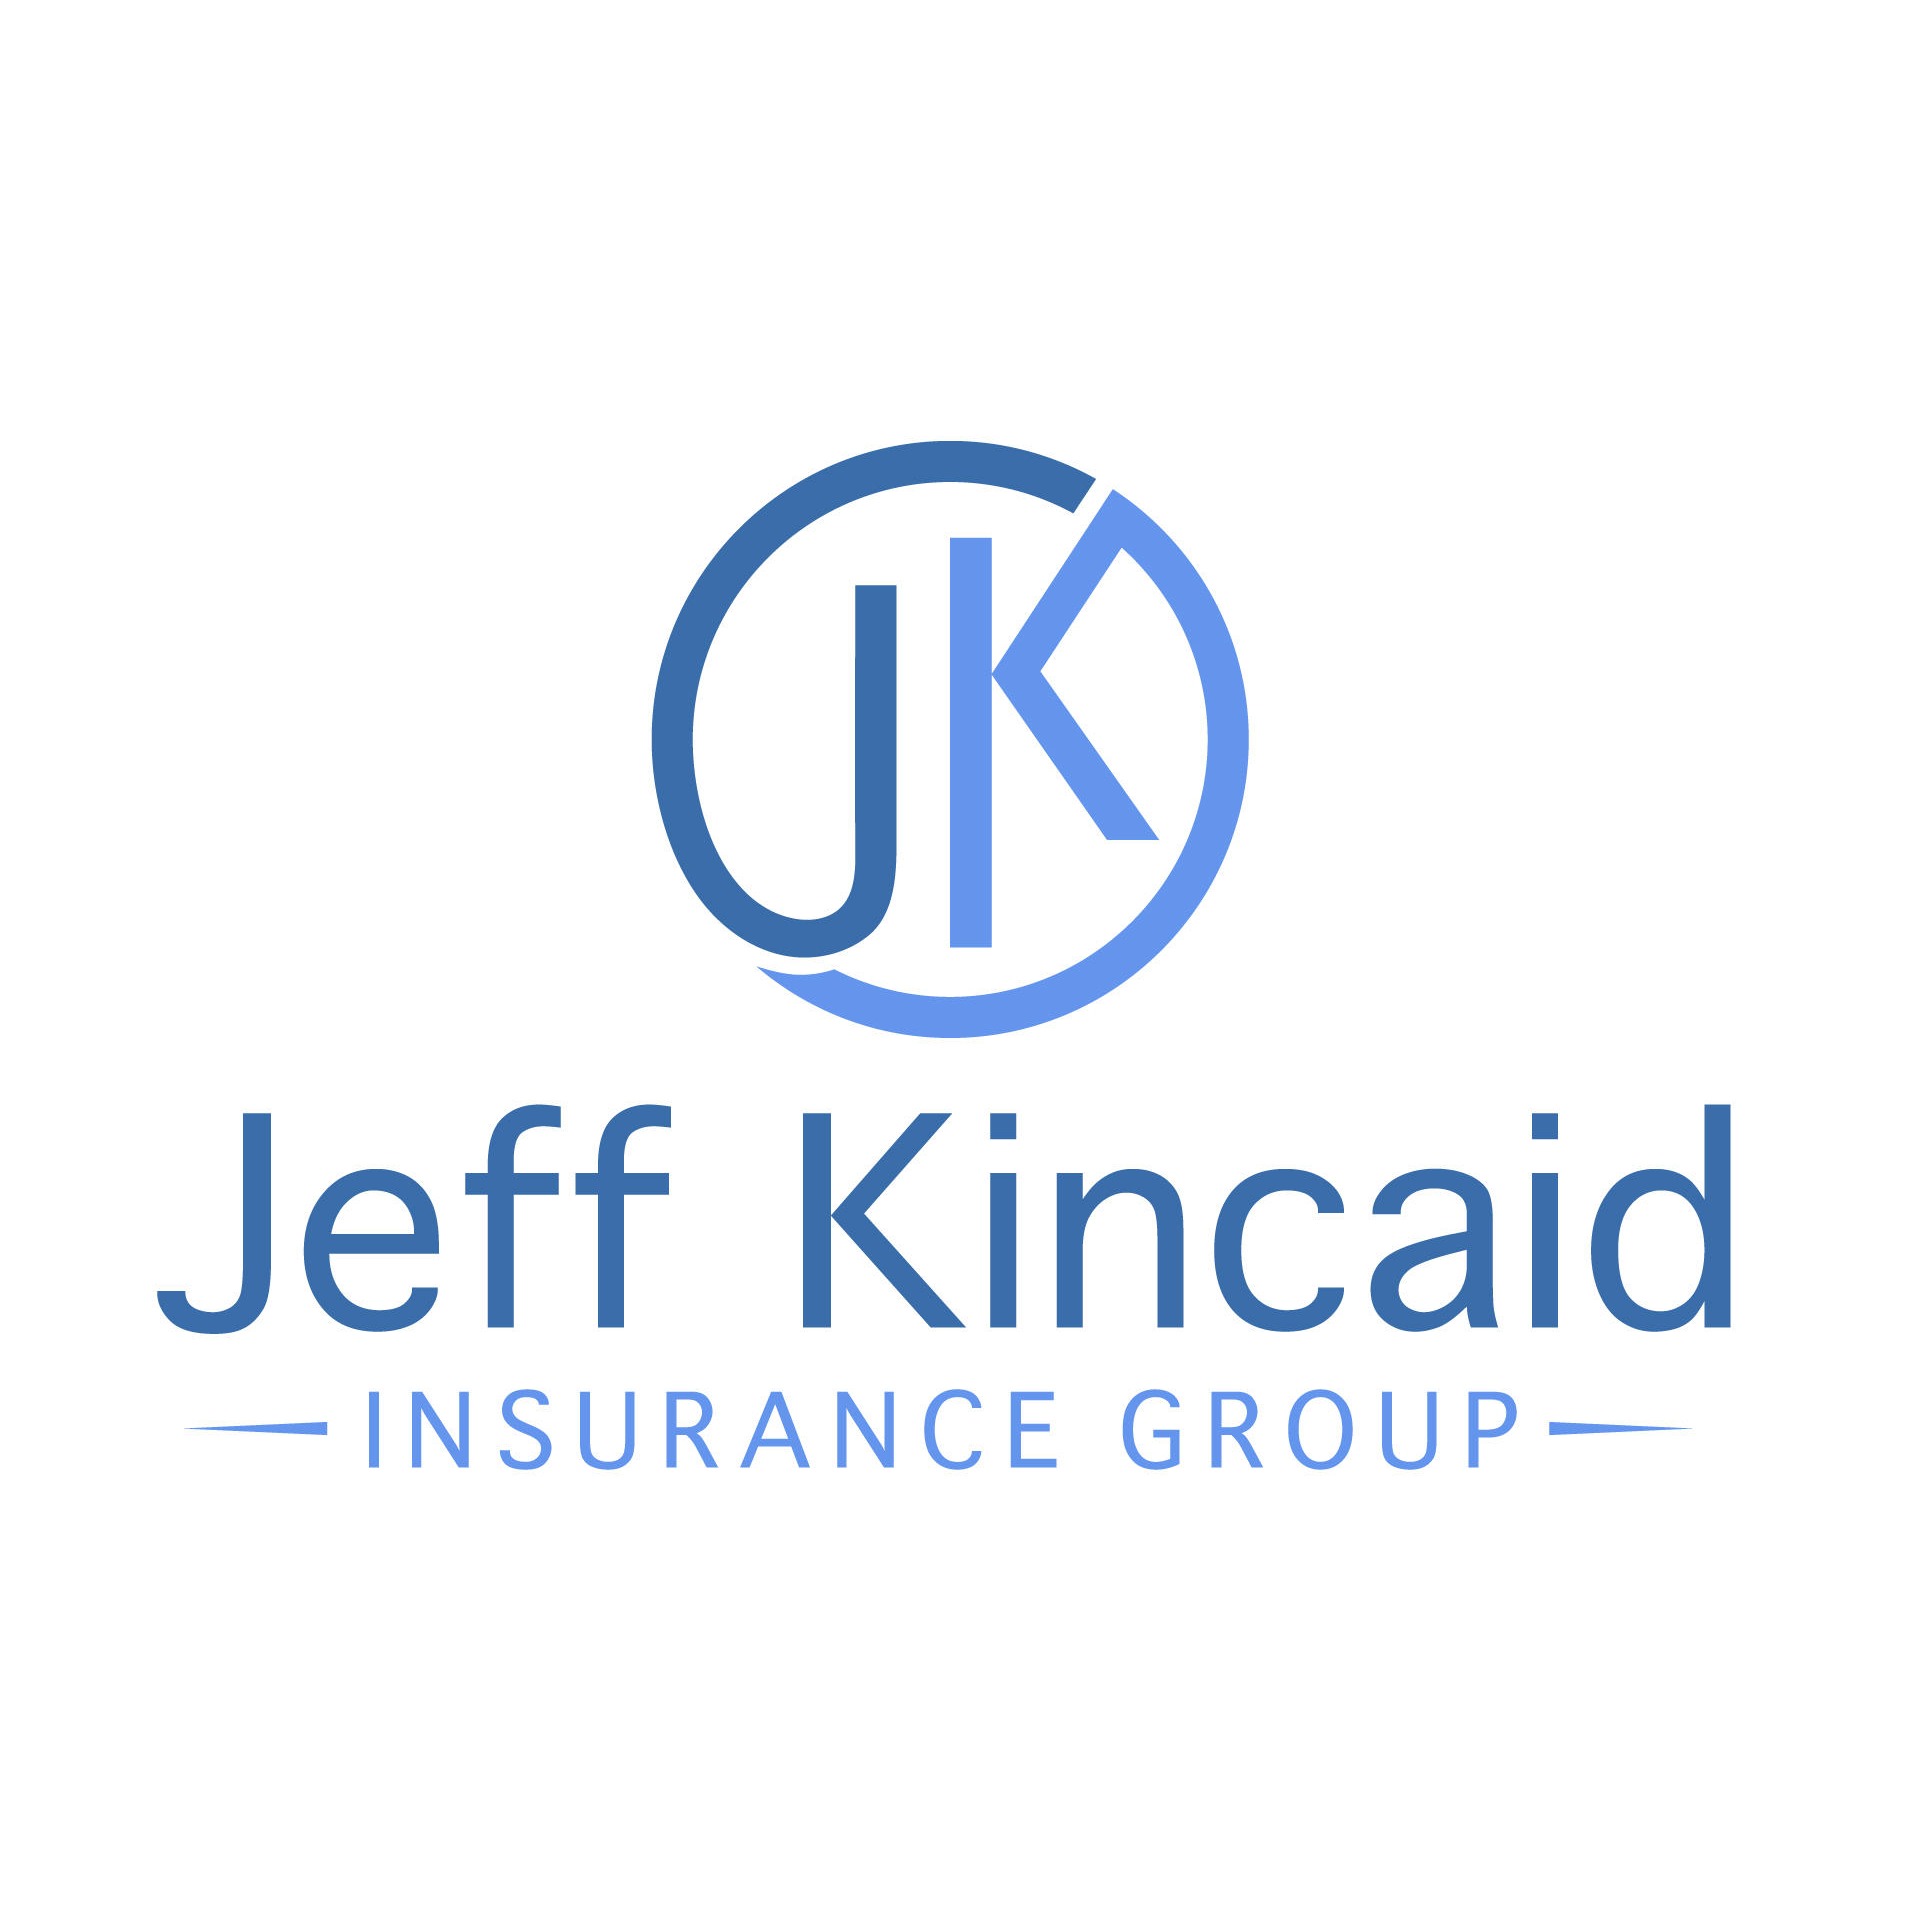 Jeff Kincaid, Insurance Agent